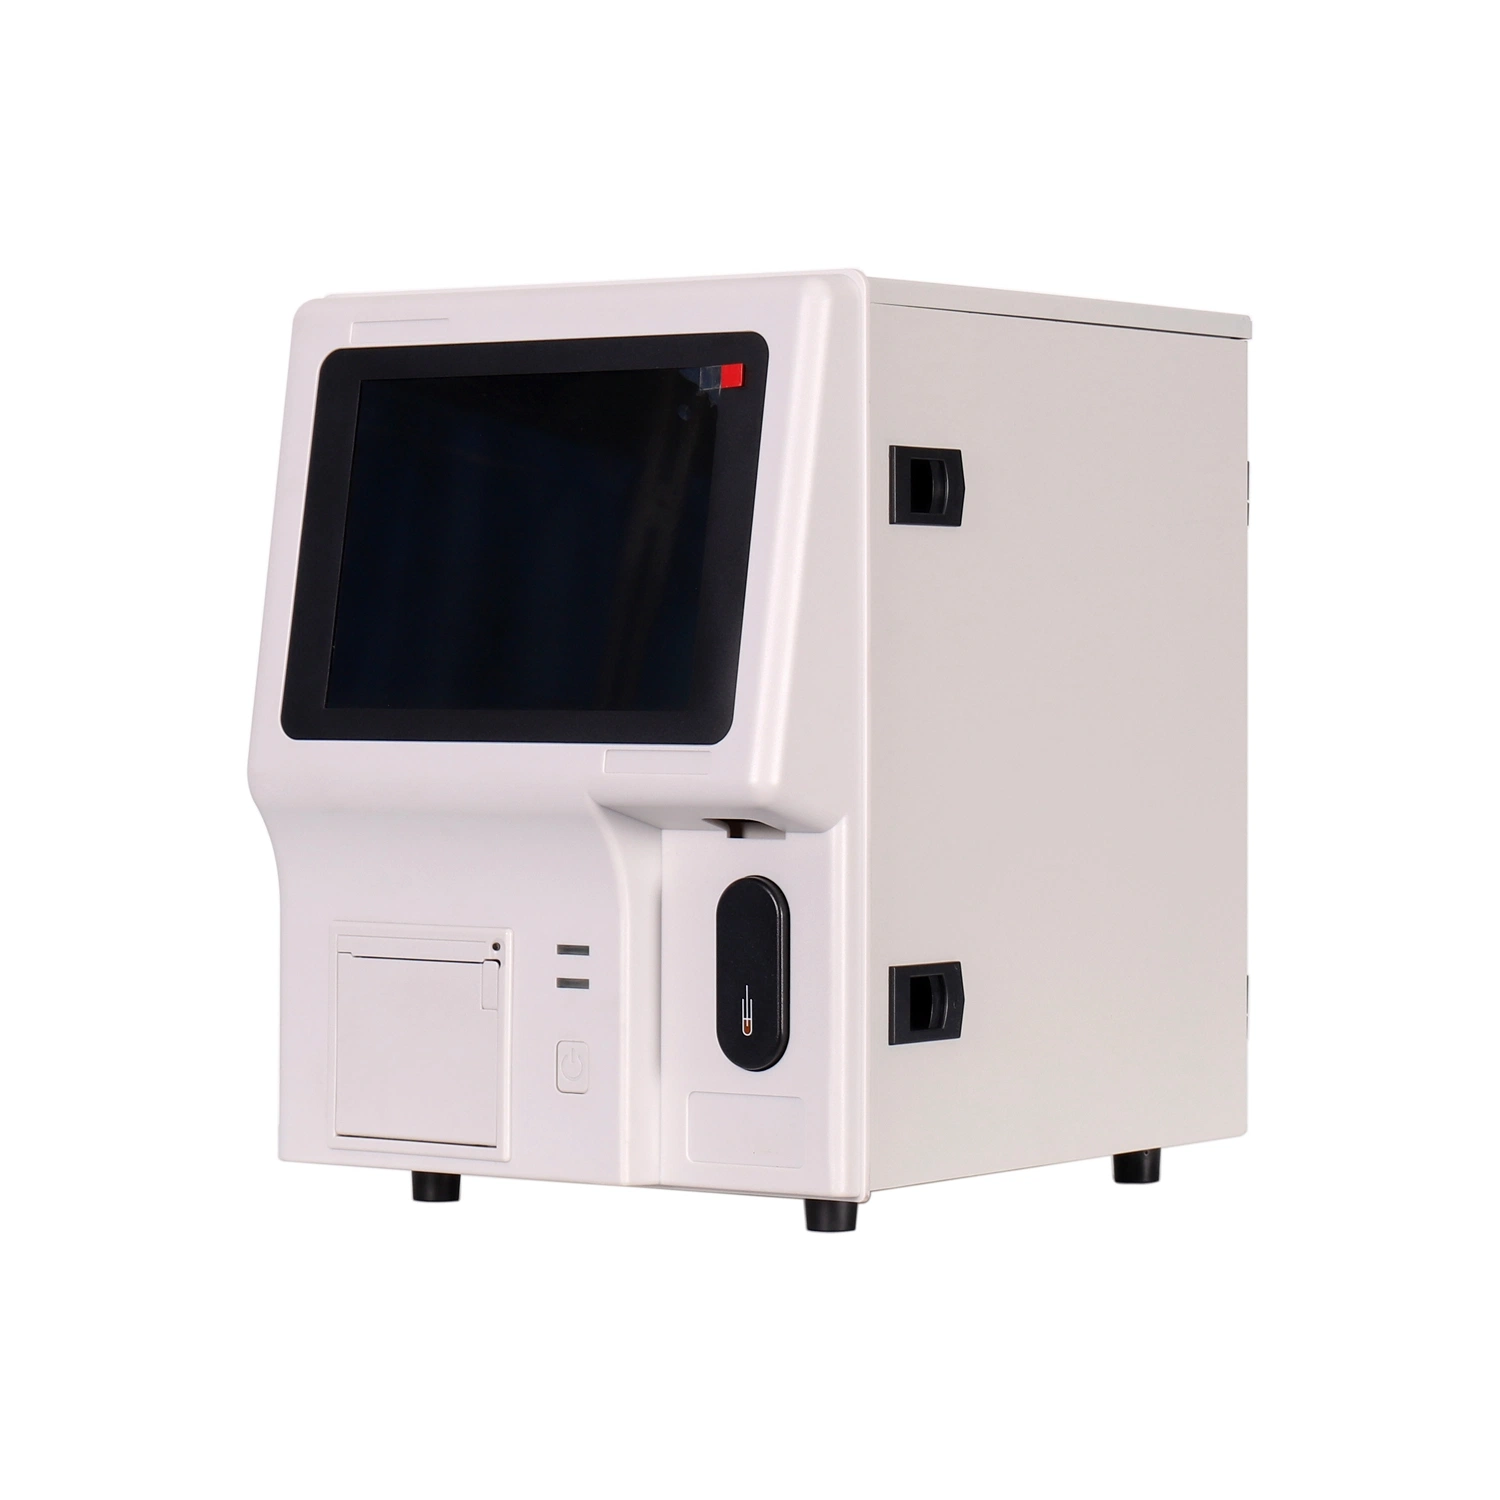 FBC Auto Veterinary portátil POCT Hematology Analyzer CBC máquina caliente Venta